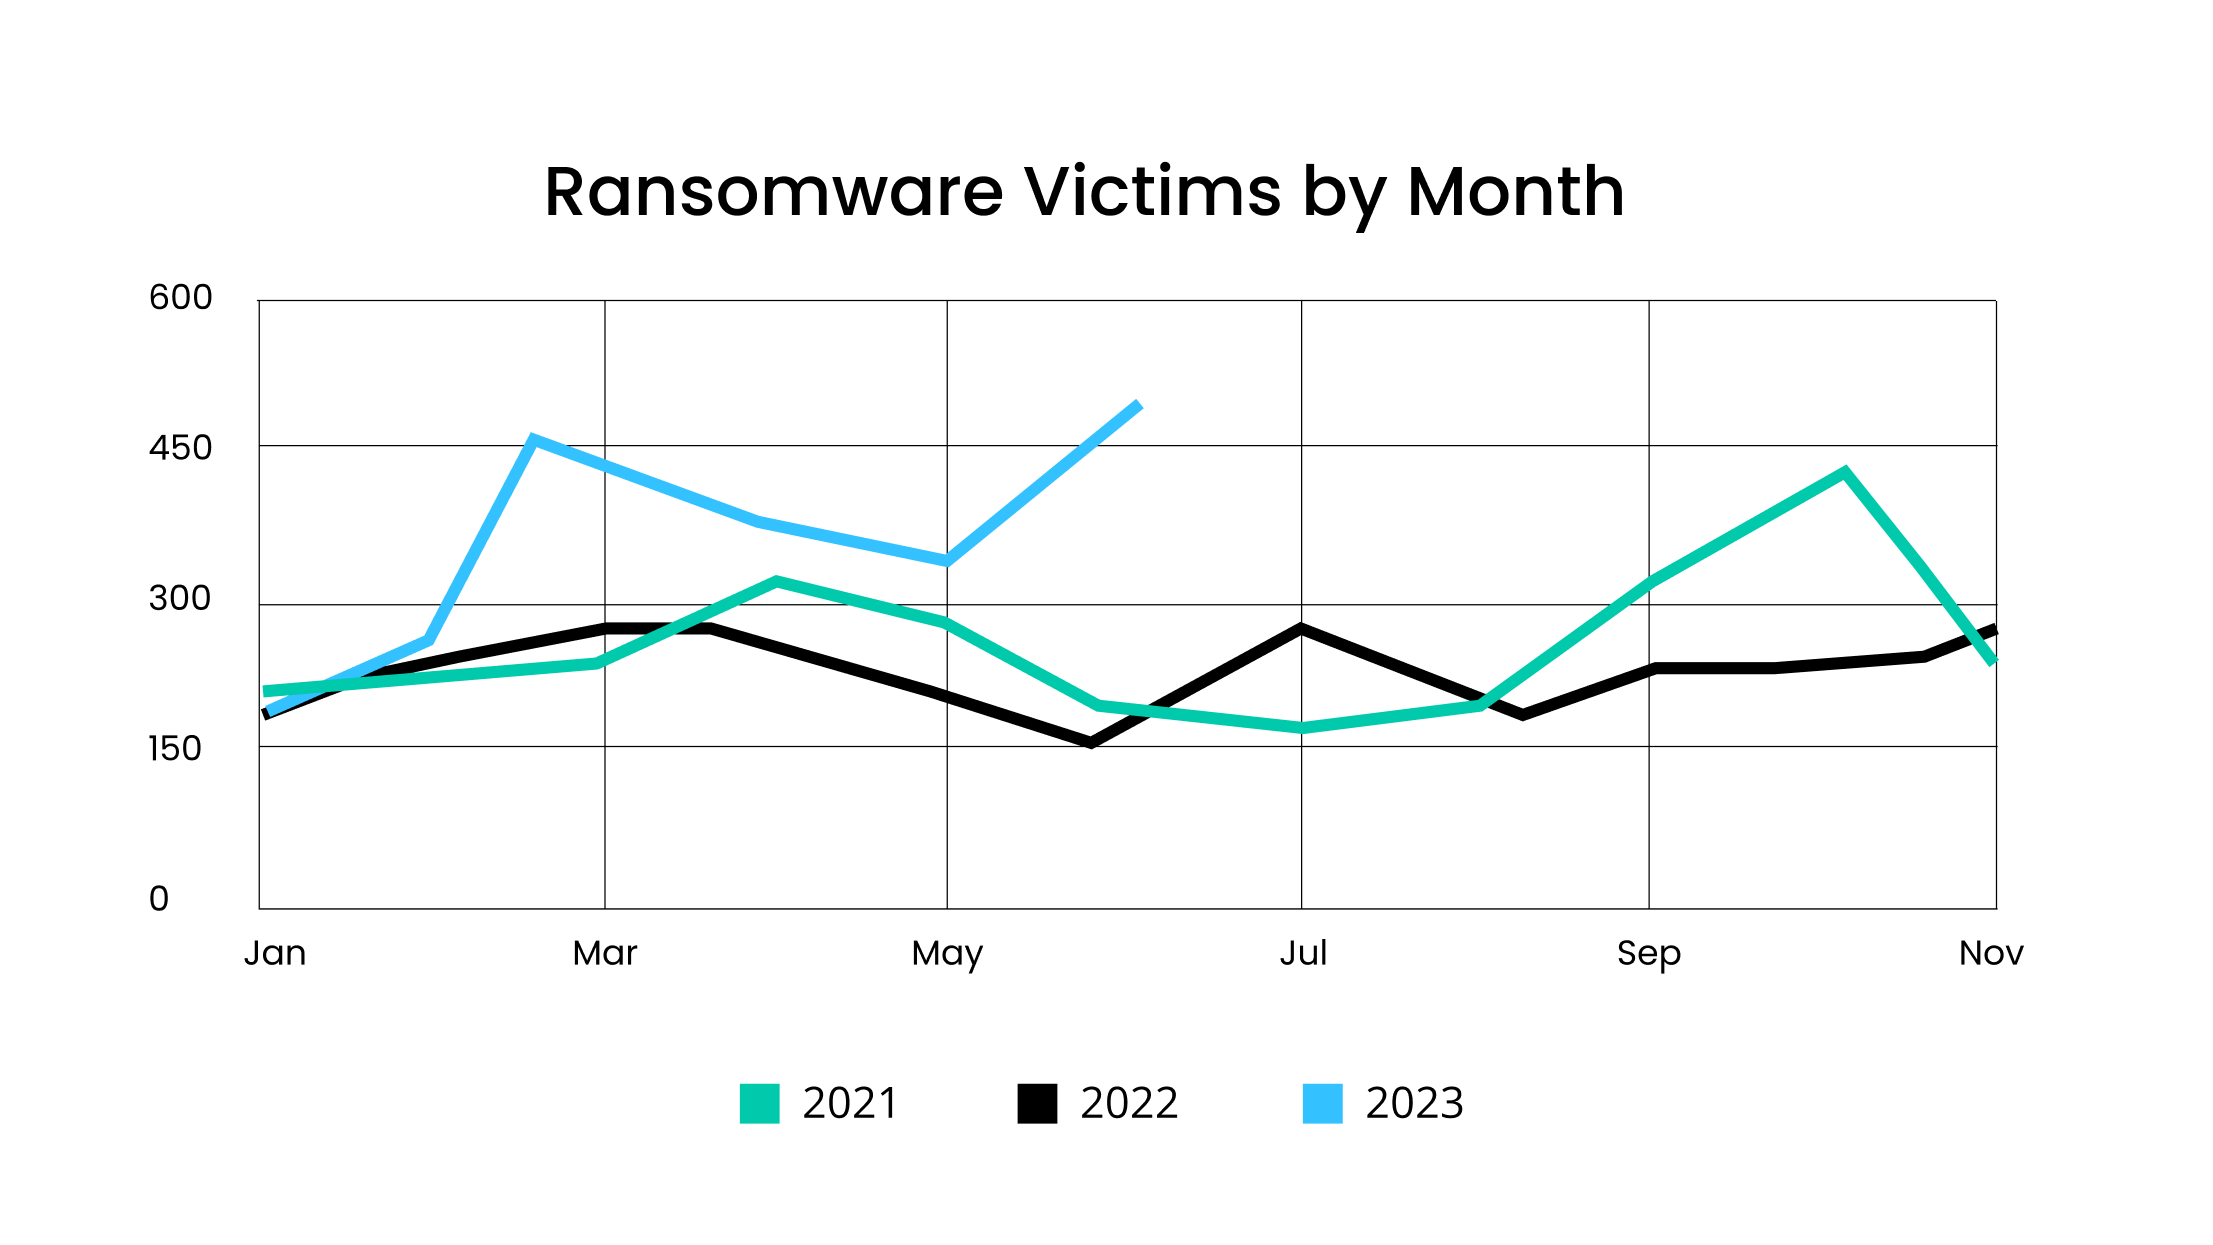 [LINE GRAPH] Ransomware Victims by Month - June 2021 vs June 2022 vs June 2023